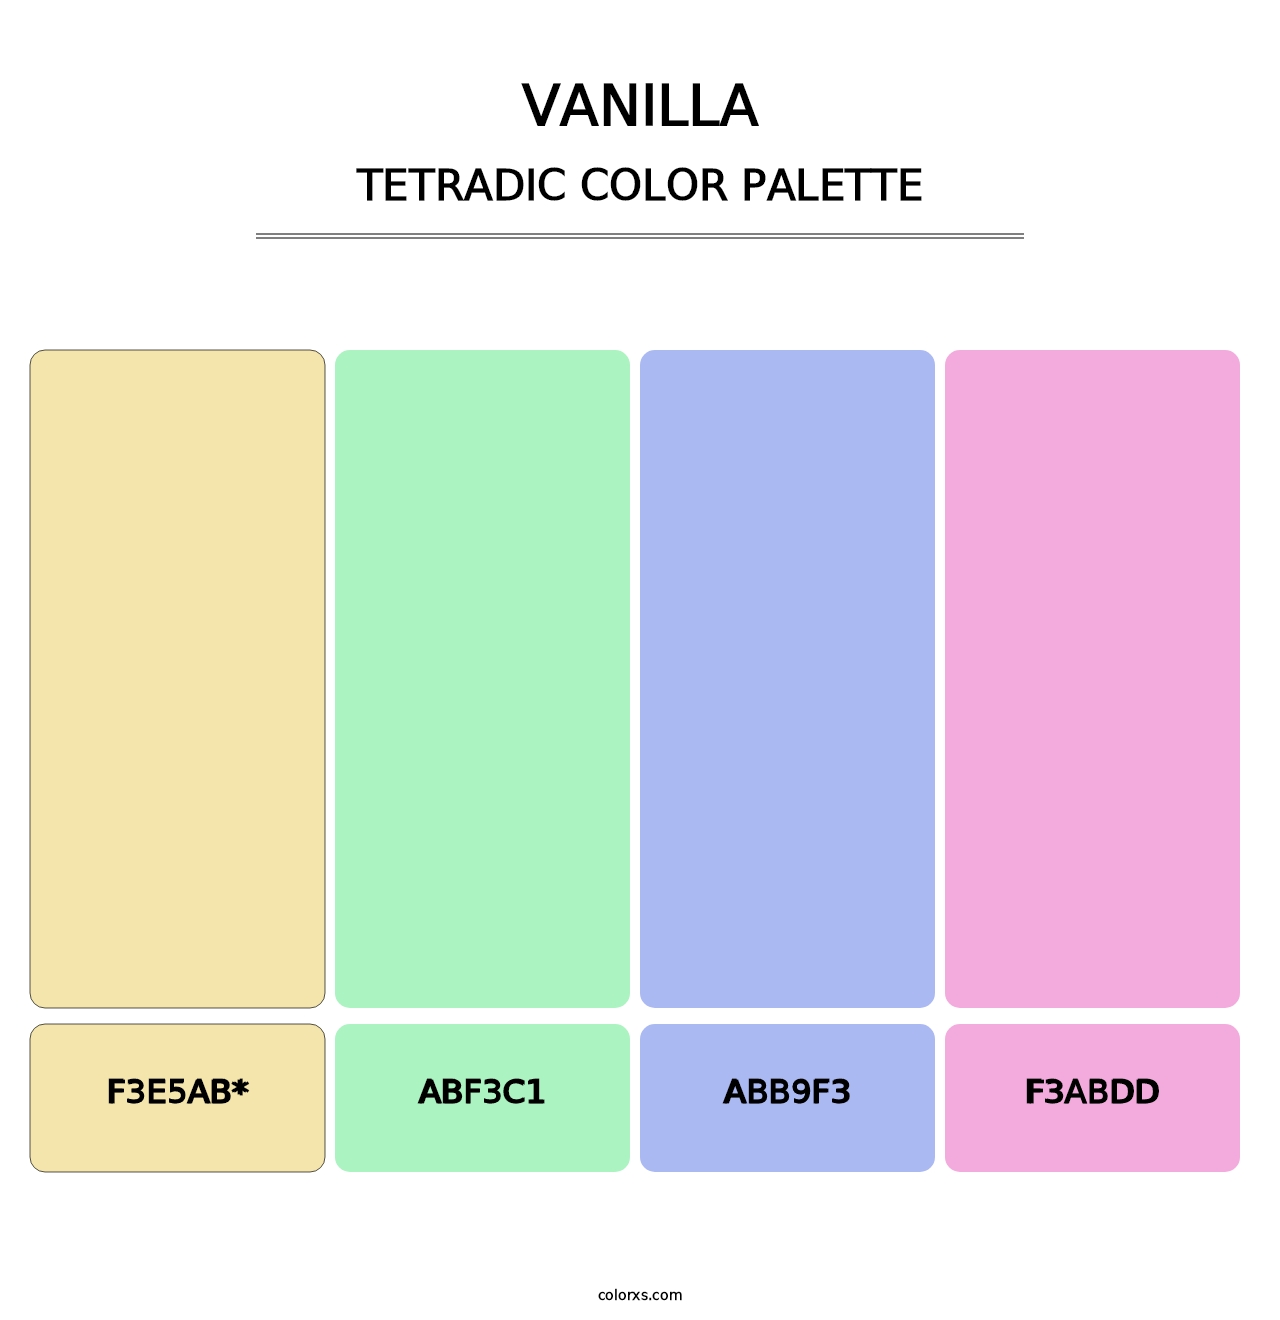 Vanilla - Tetradic Color Palette